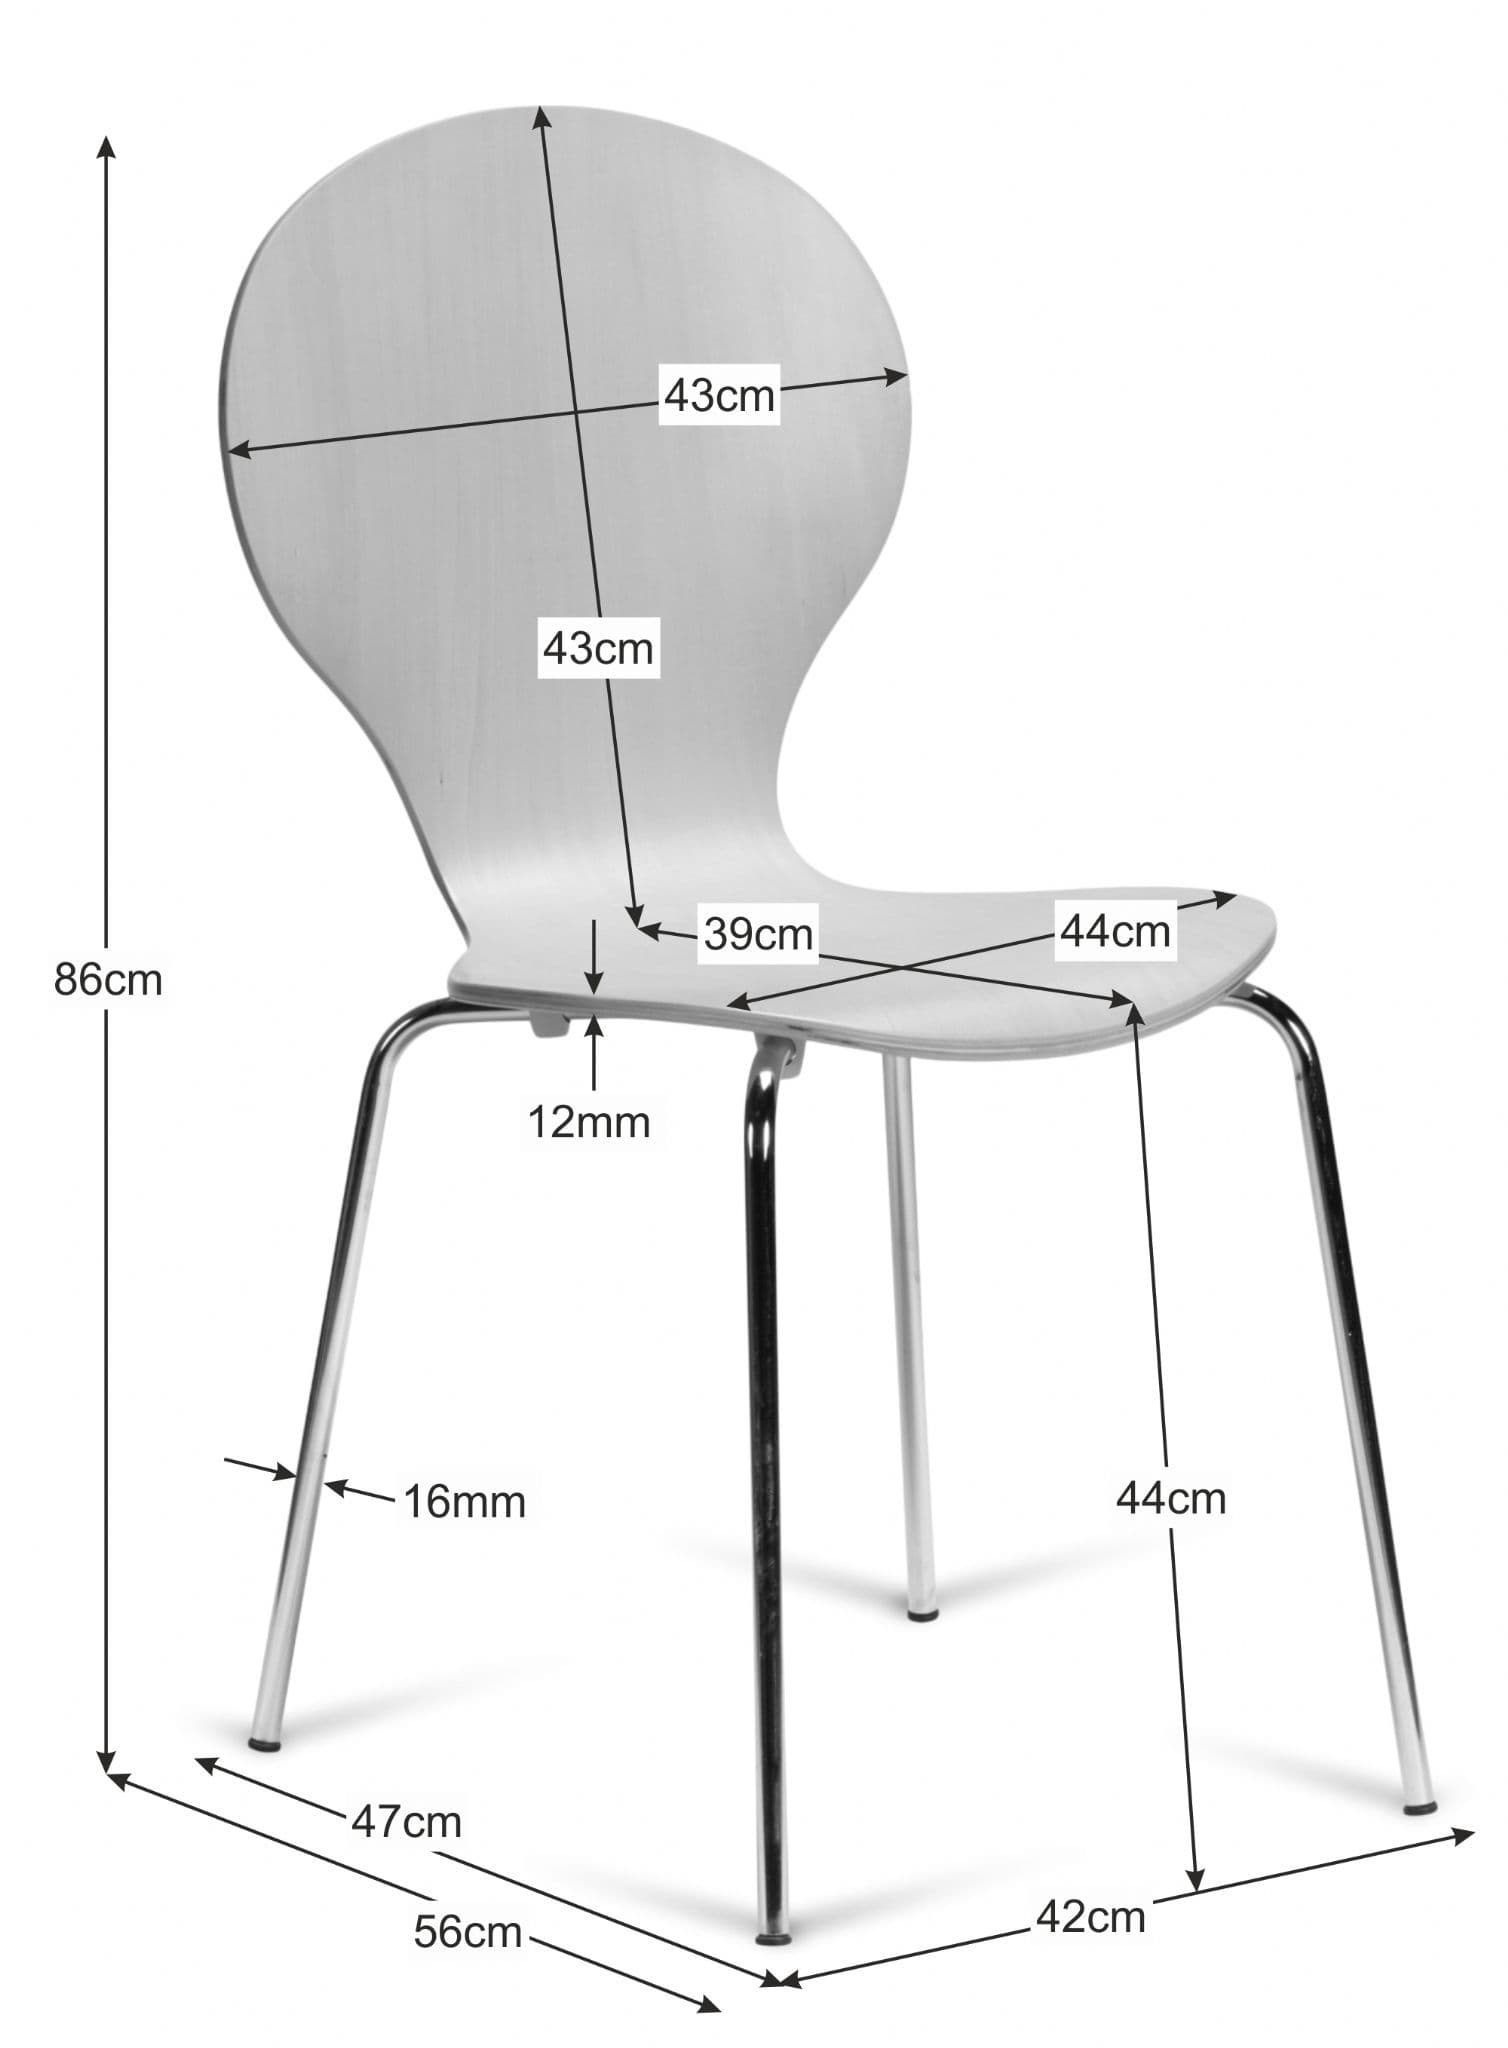 Kimberley Slate Grey & Chrome Dining Chairs Dimensions